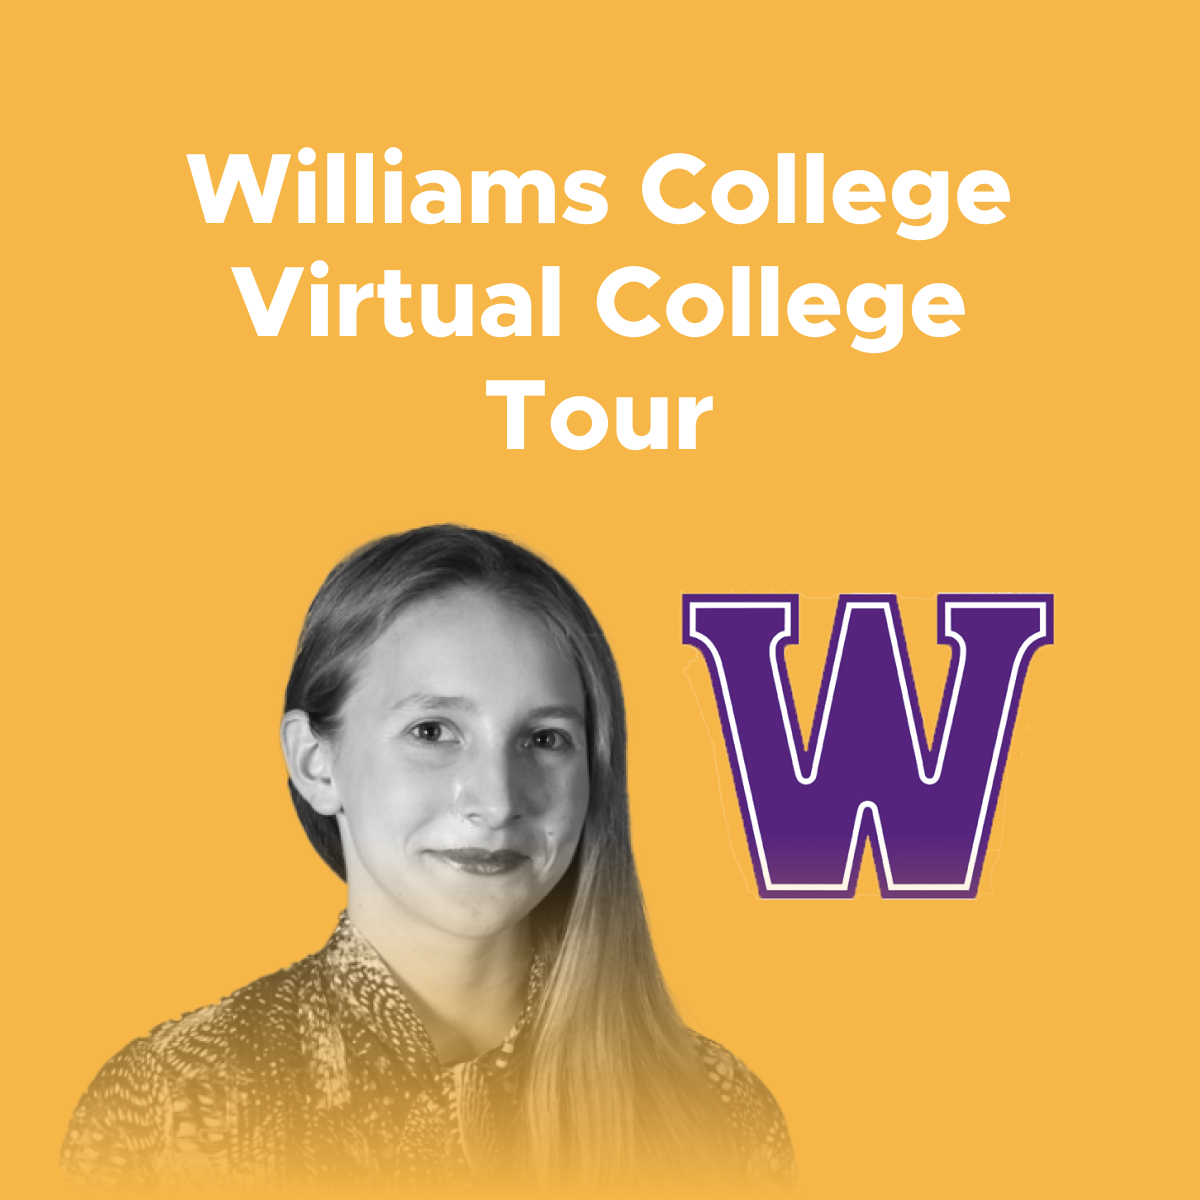 williams college tour schedule